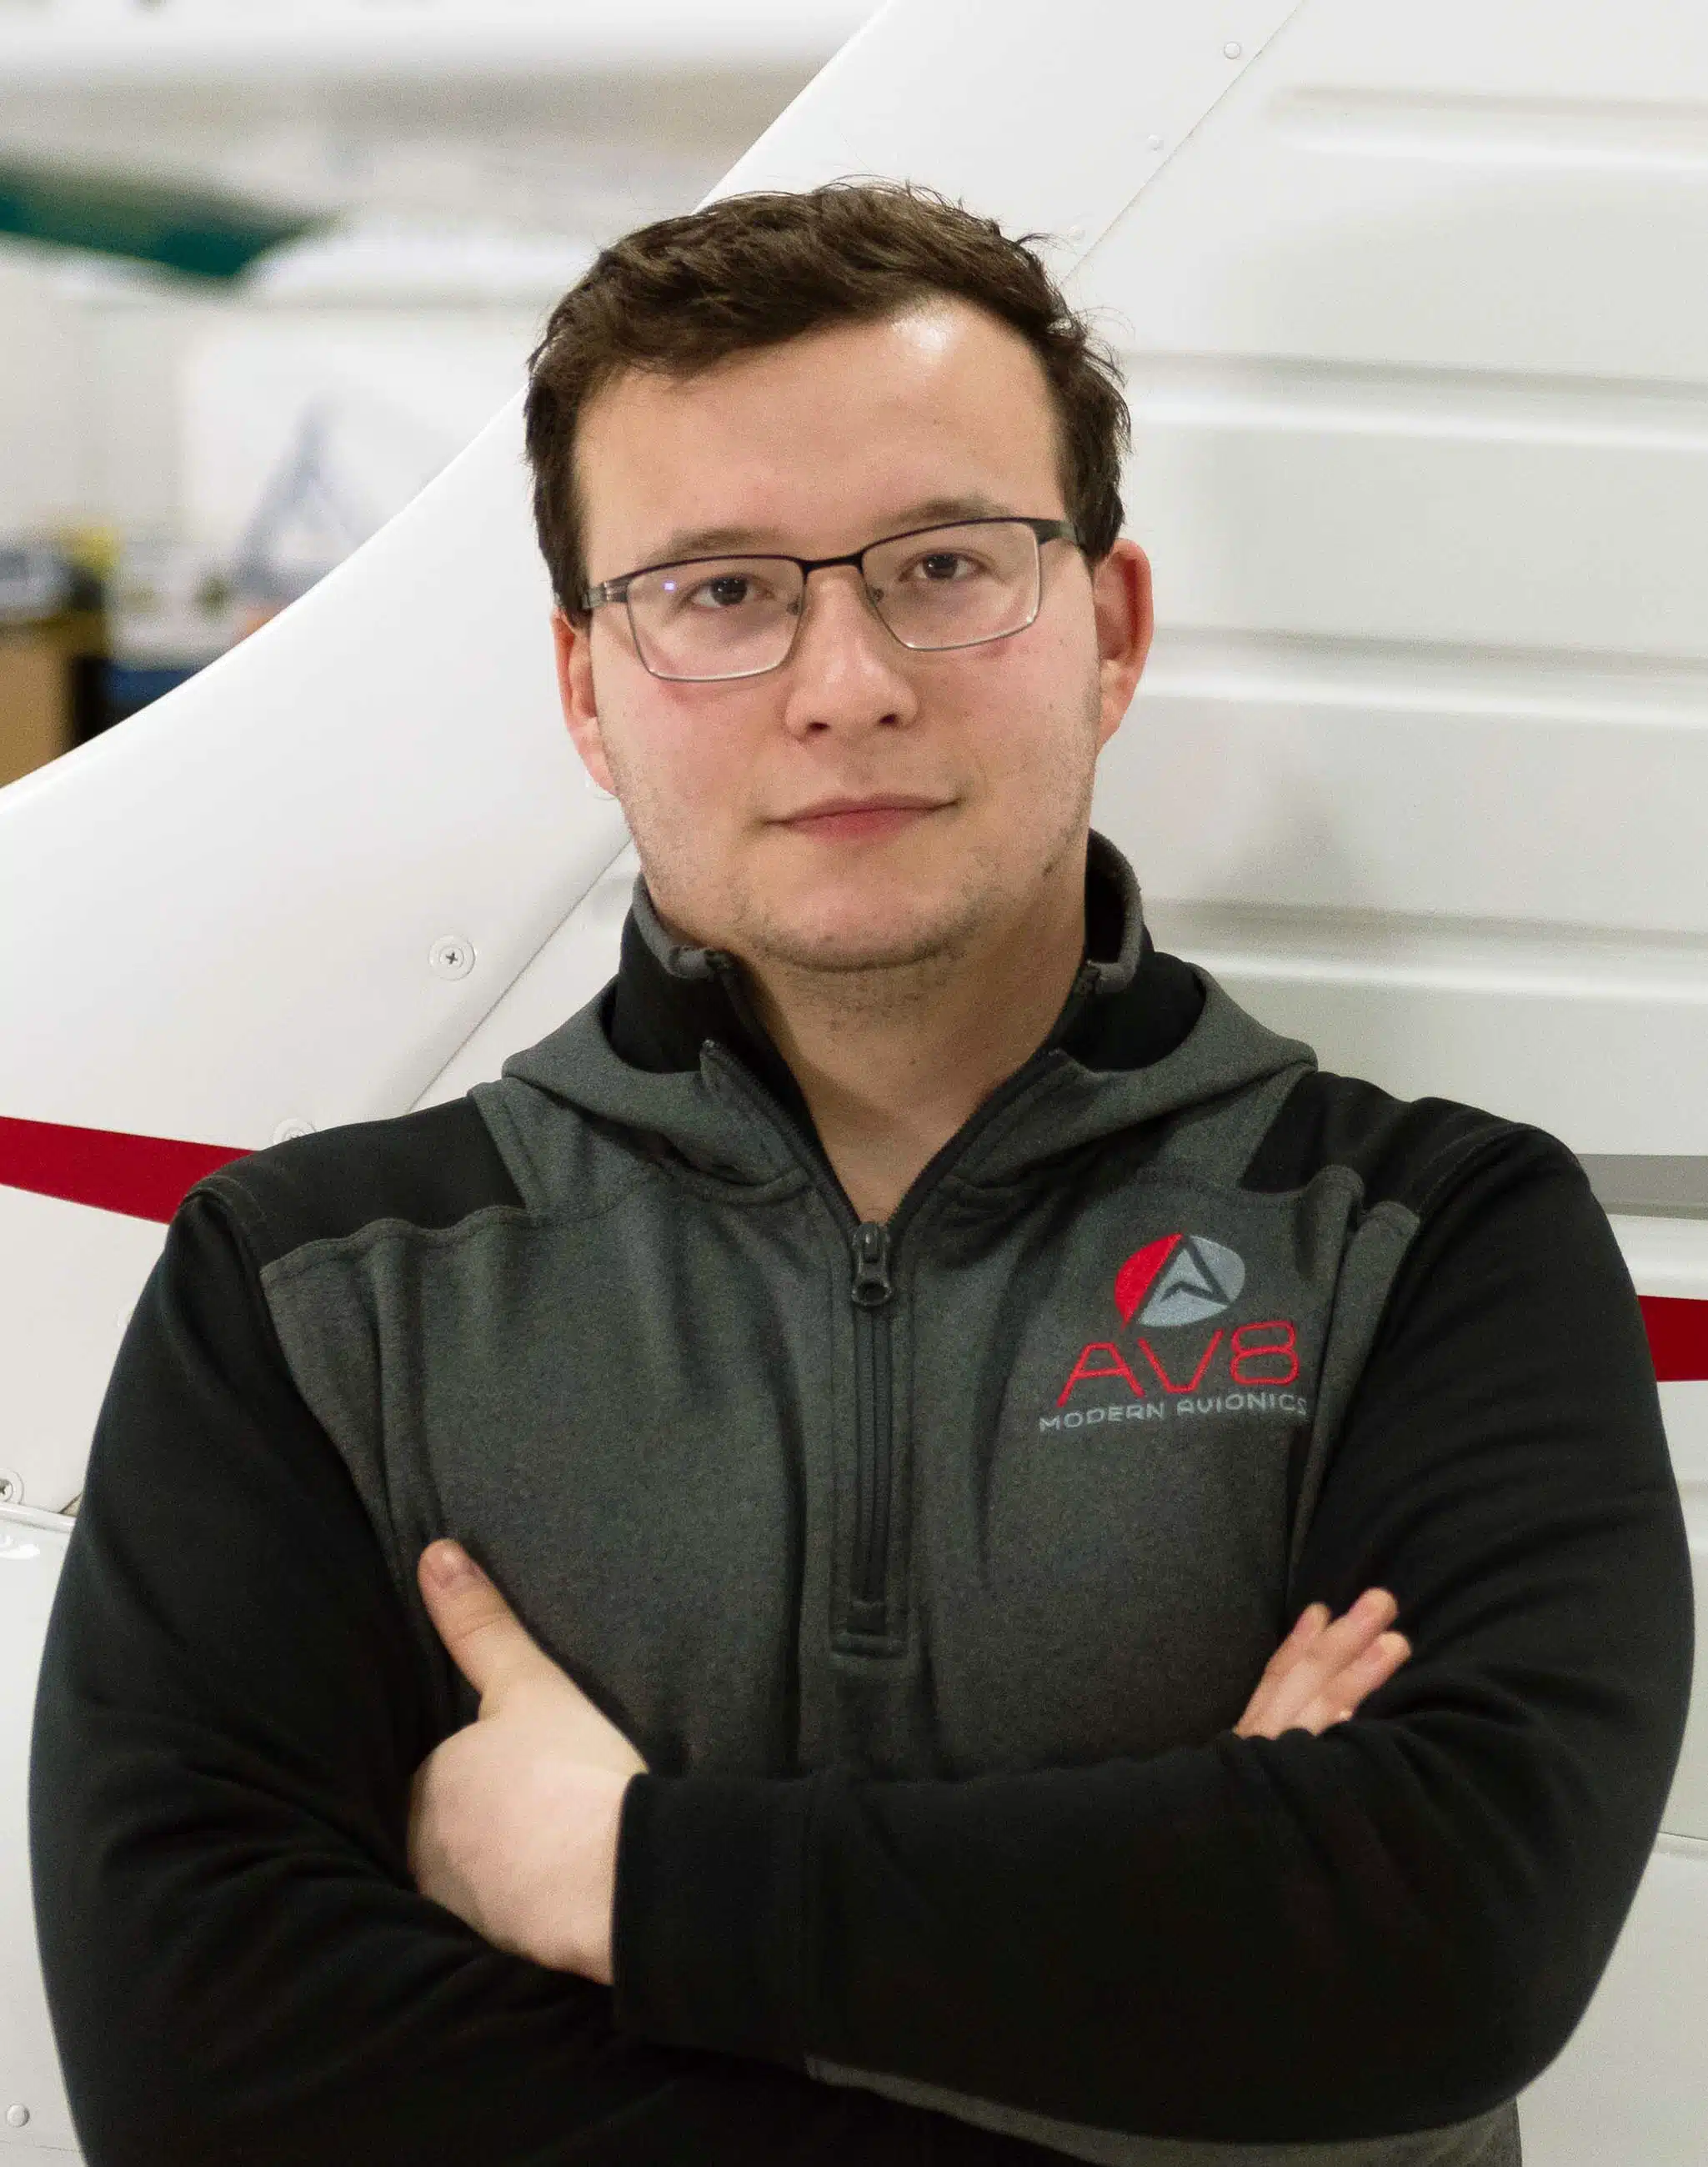 Eduard Dyakulich, Maintenance Technician, Private Rotorcraft license